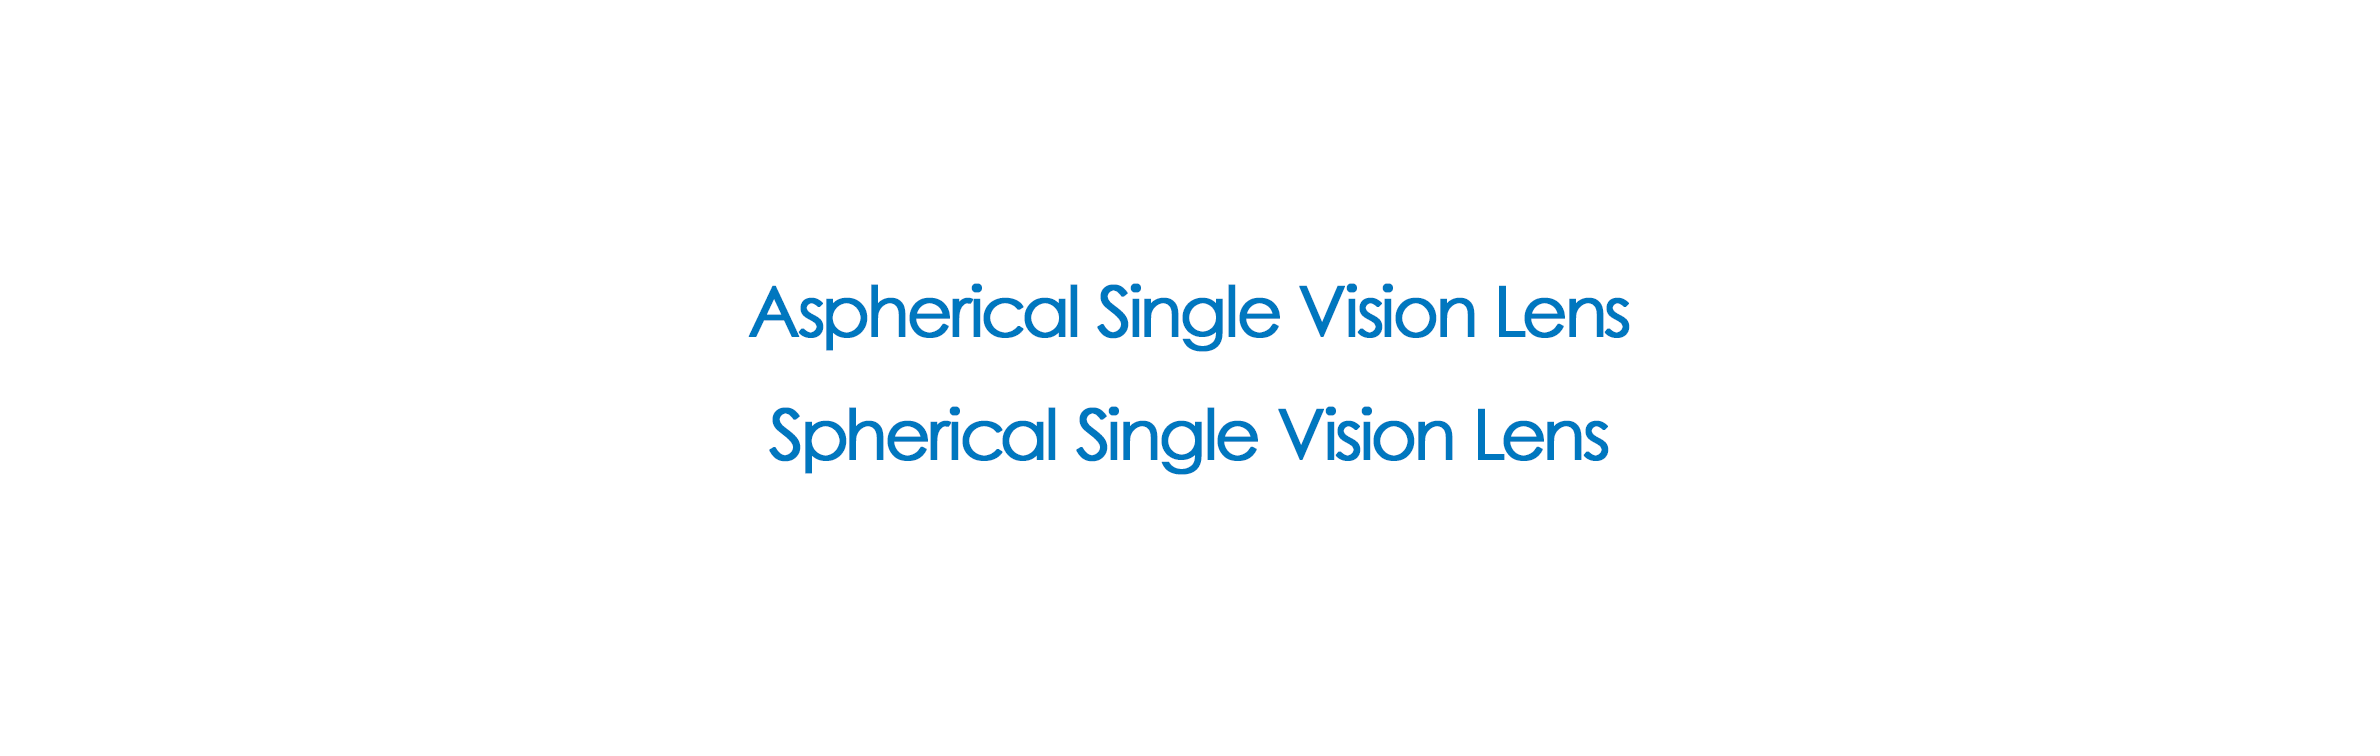 Aspherical Single Vision Lens / Spherical Single Vision Lens